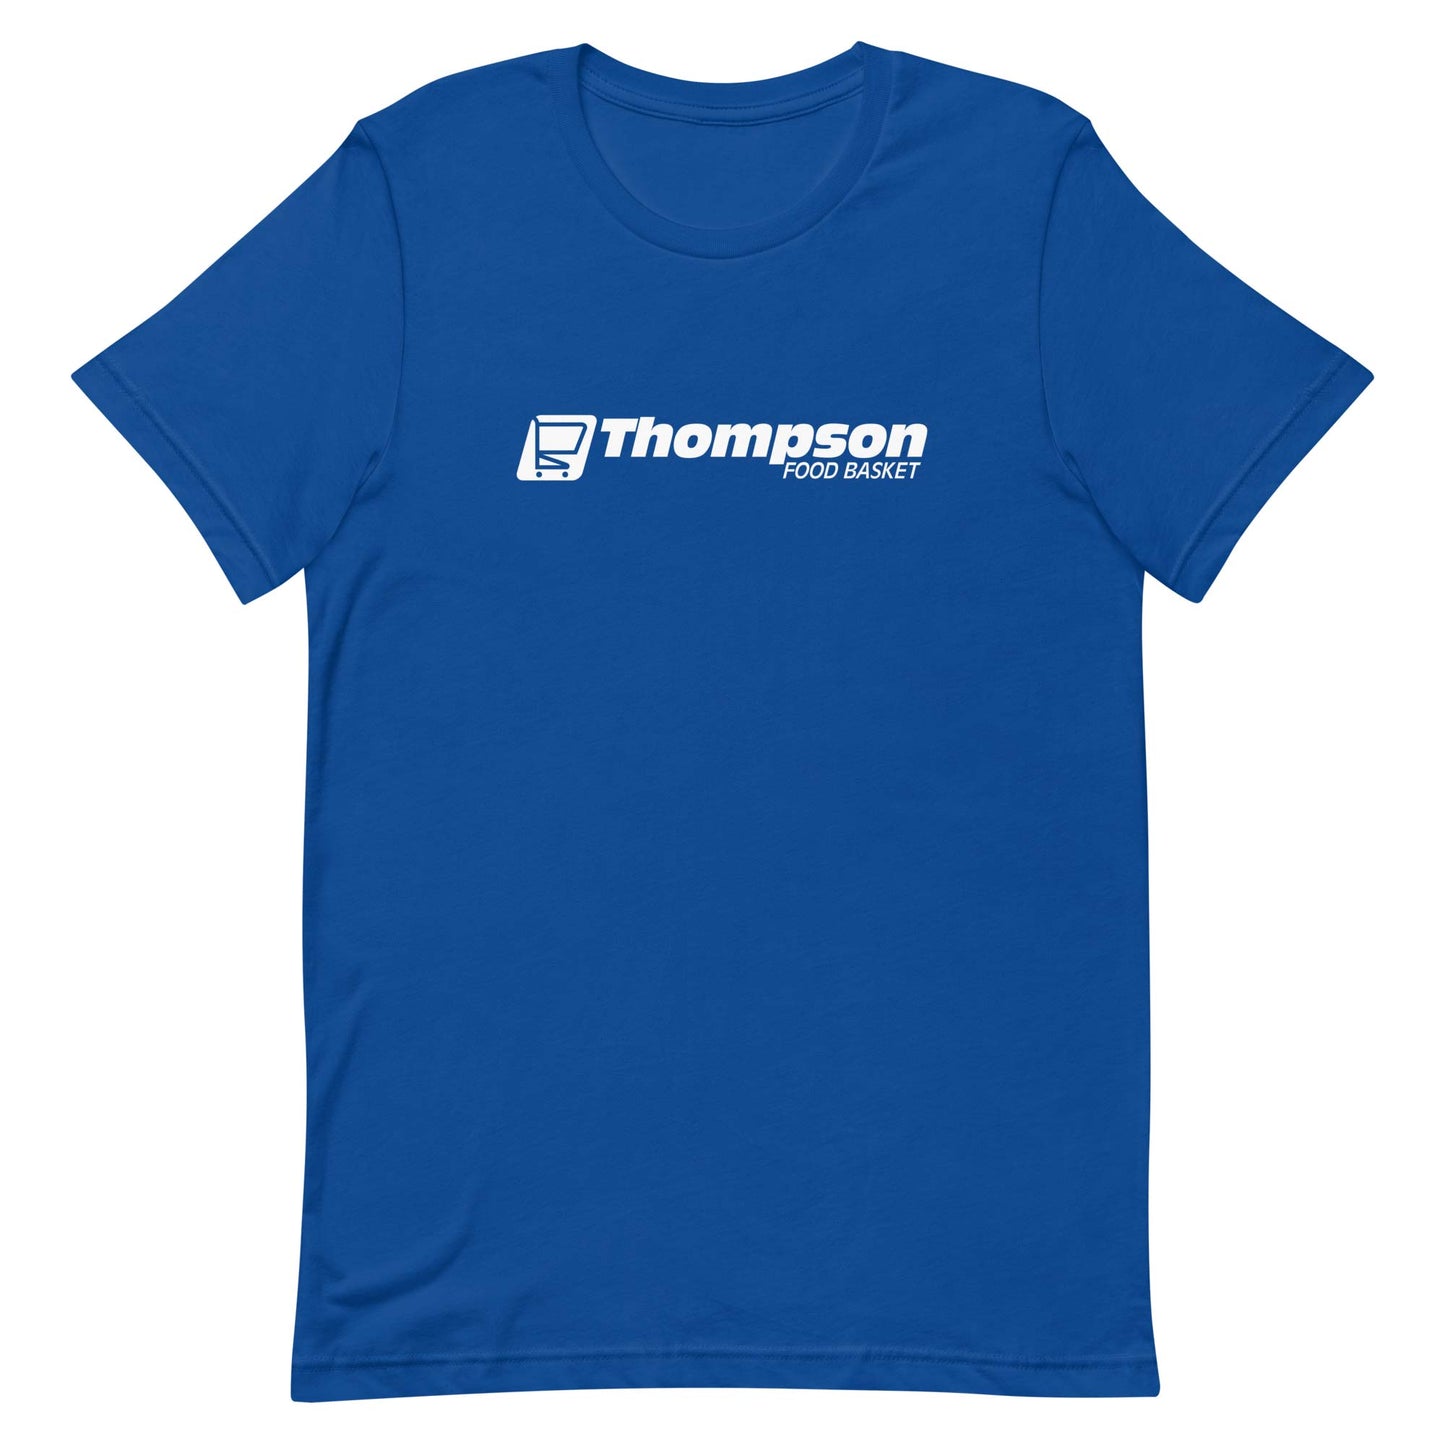 Thompson Food Basket Peoria Unisex Retro T-shirt - Bygone Brand